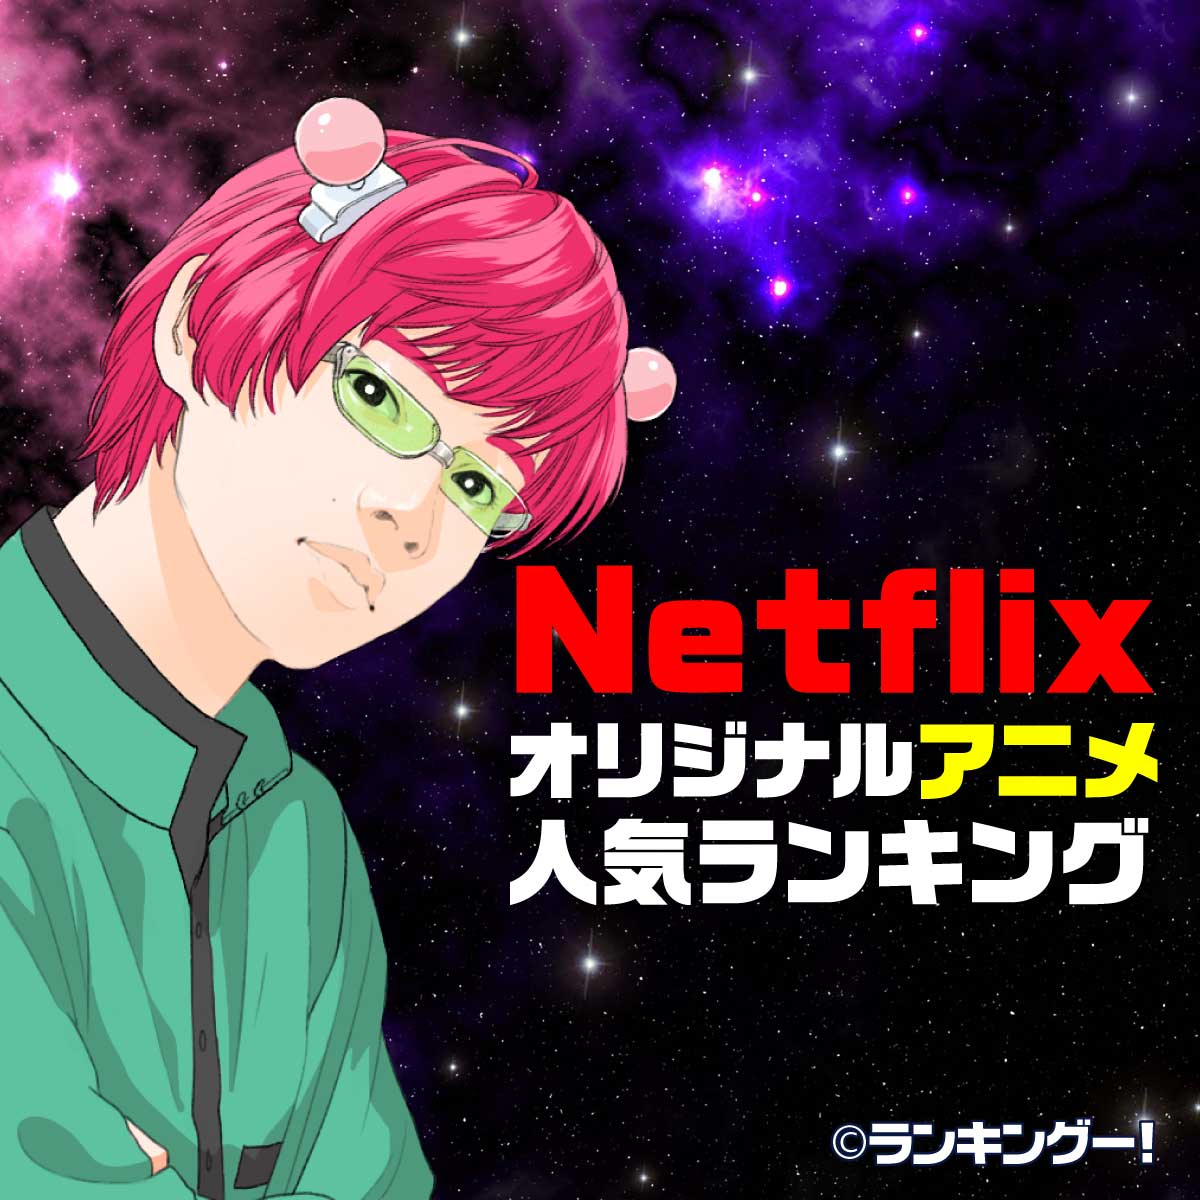 Netflixオリジナル神アニメおすすめランキングtop 16 位 ランキングー